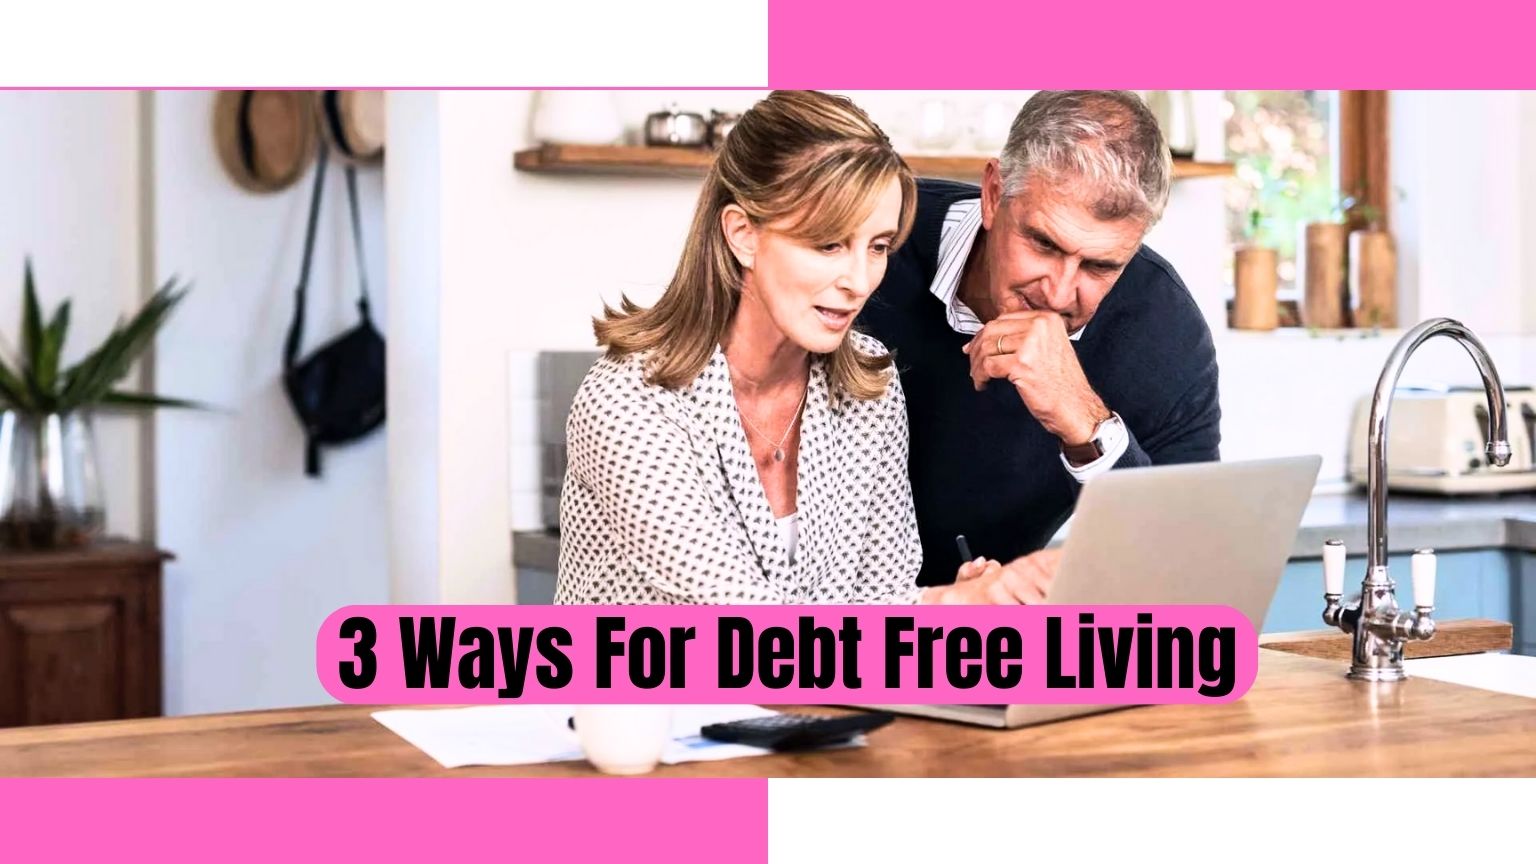 debt free, debt free living,3 Ways For Debt Free Living